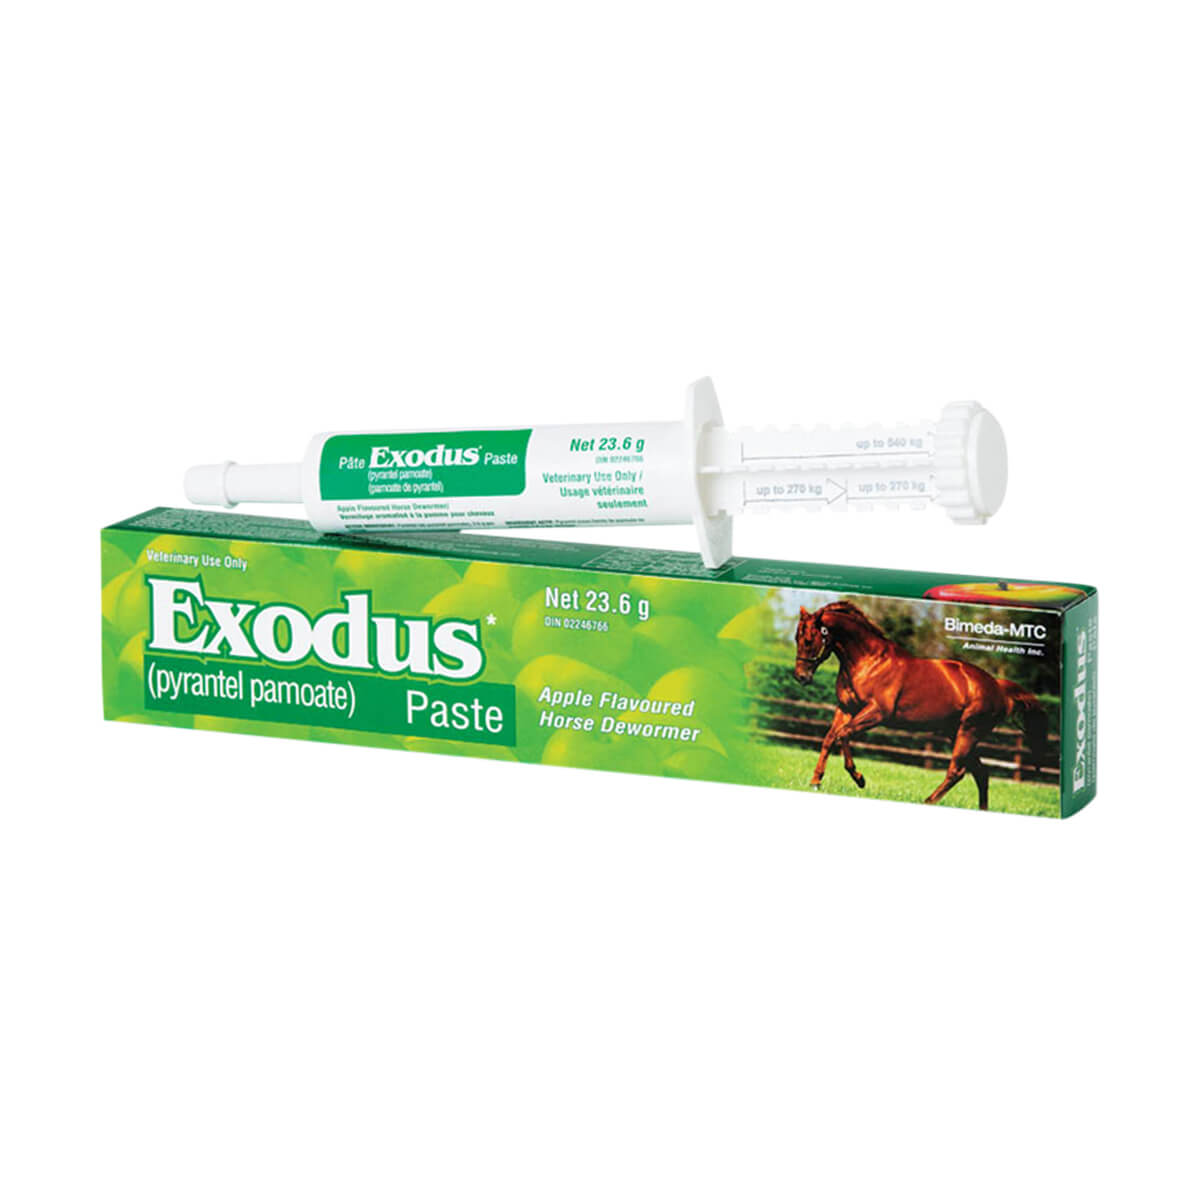 Exodus Oral Paste Dewormer